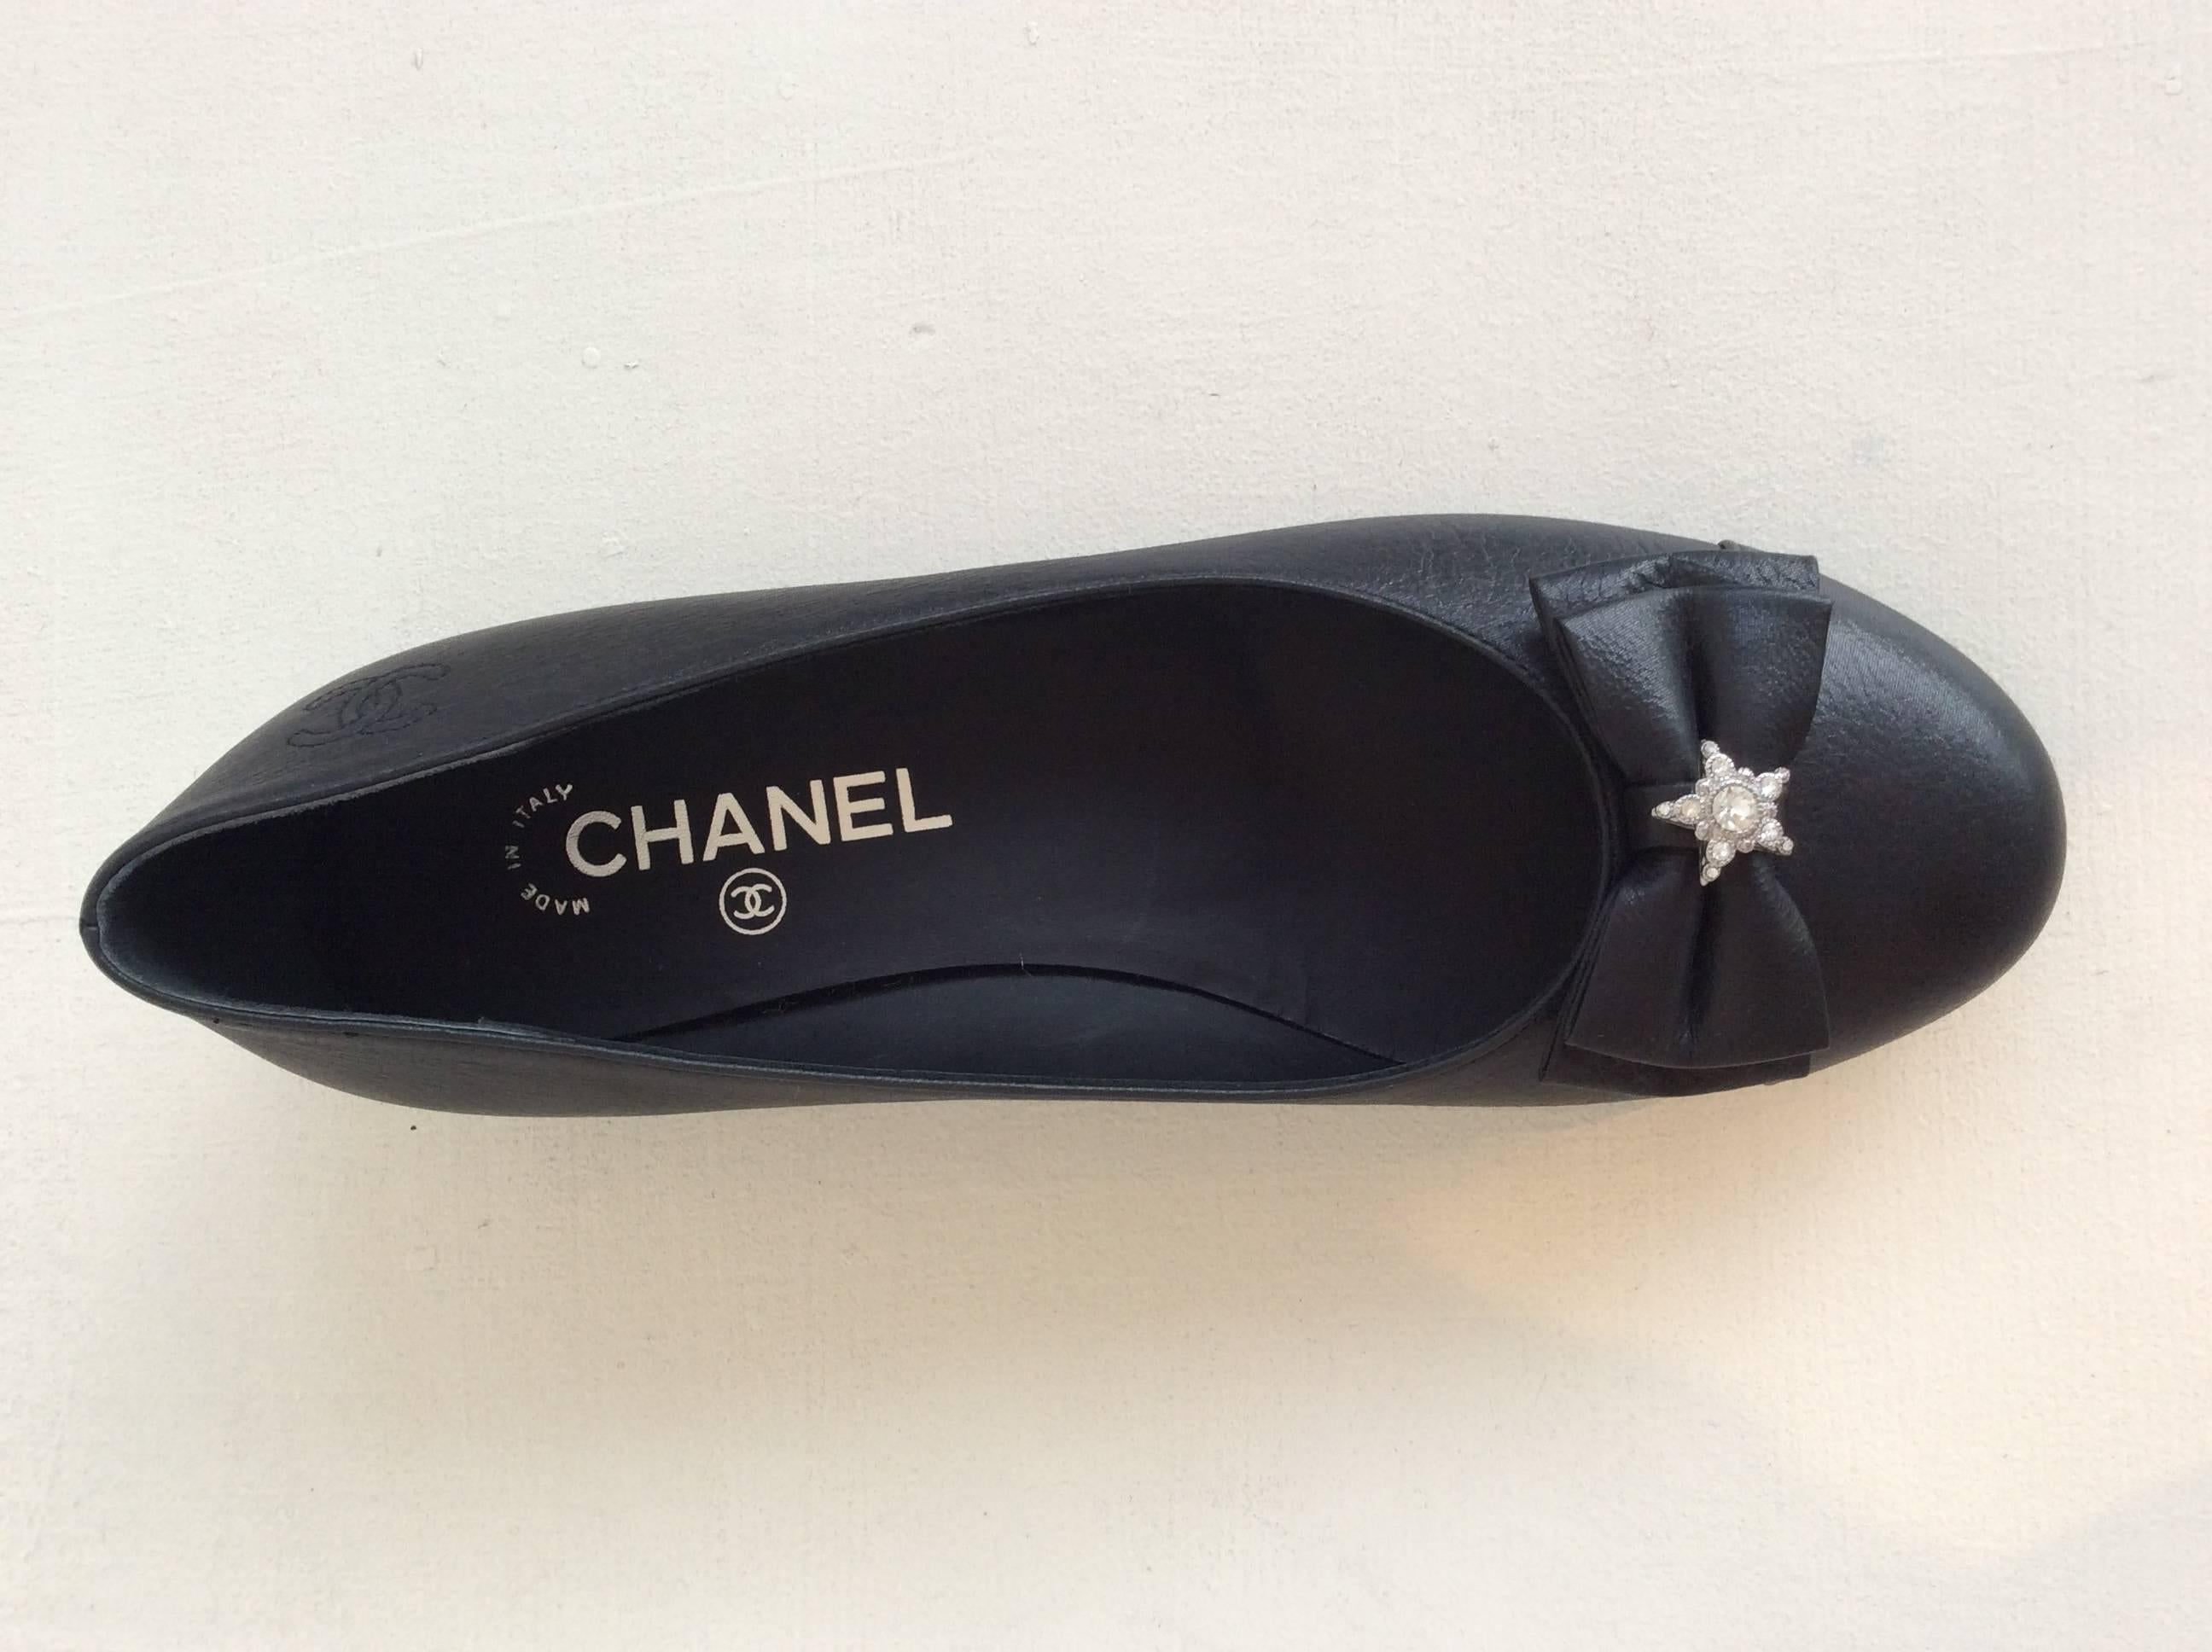 Chanel Black Leather Ballerina Flats Sz 37.5 1